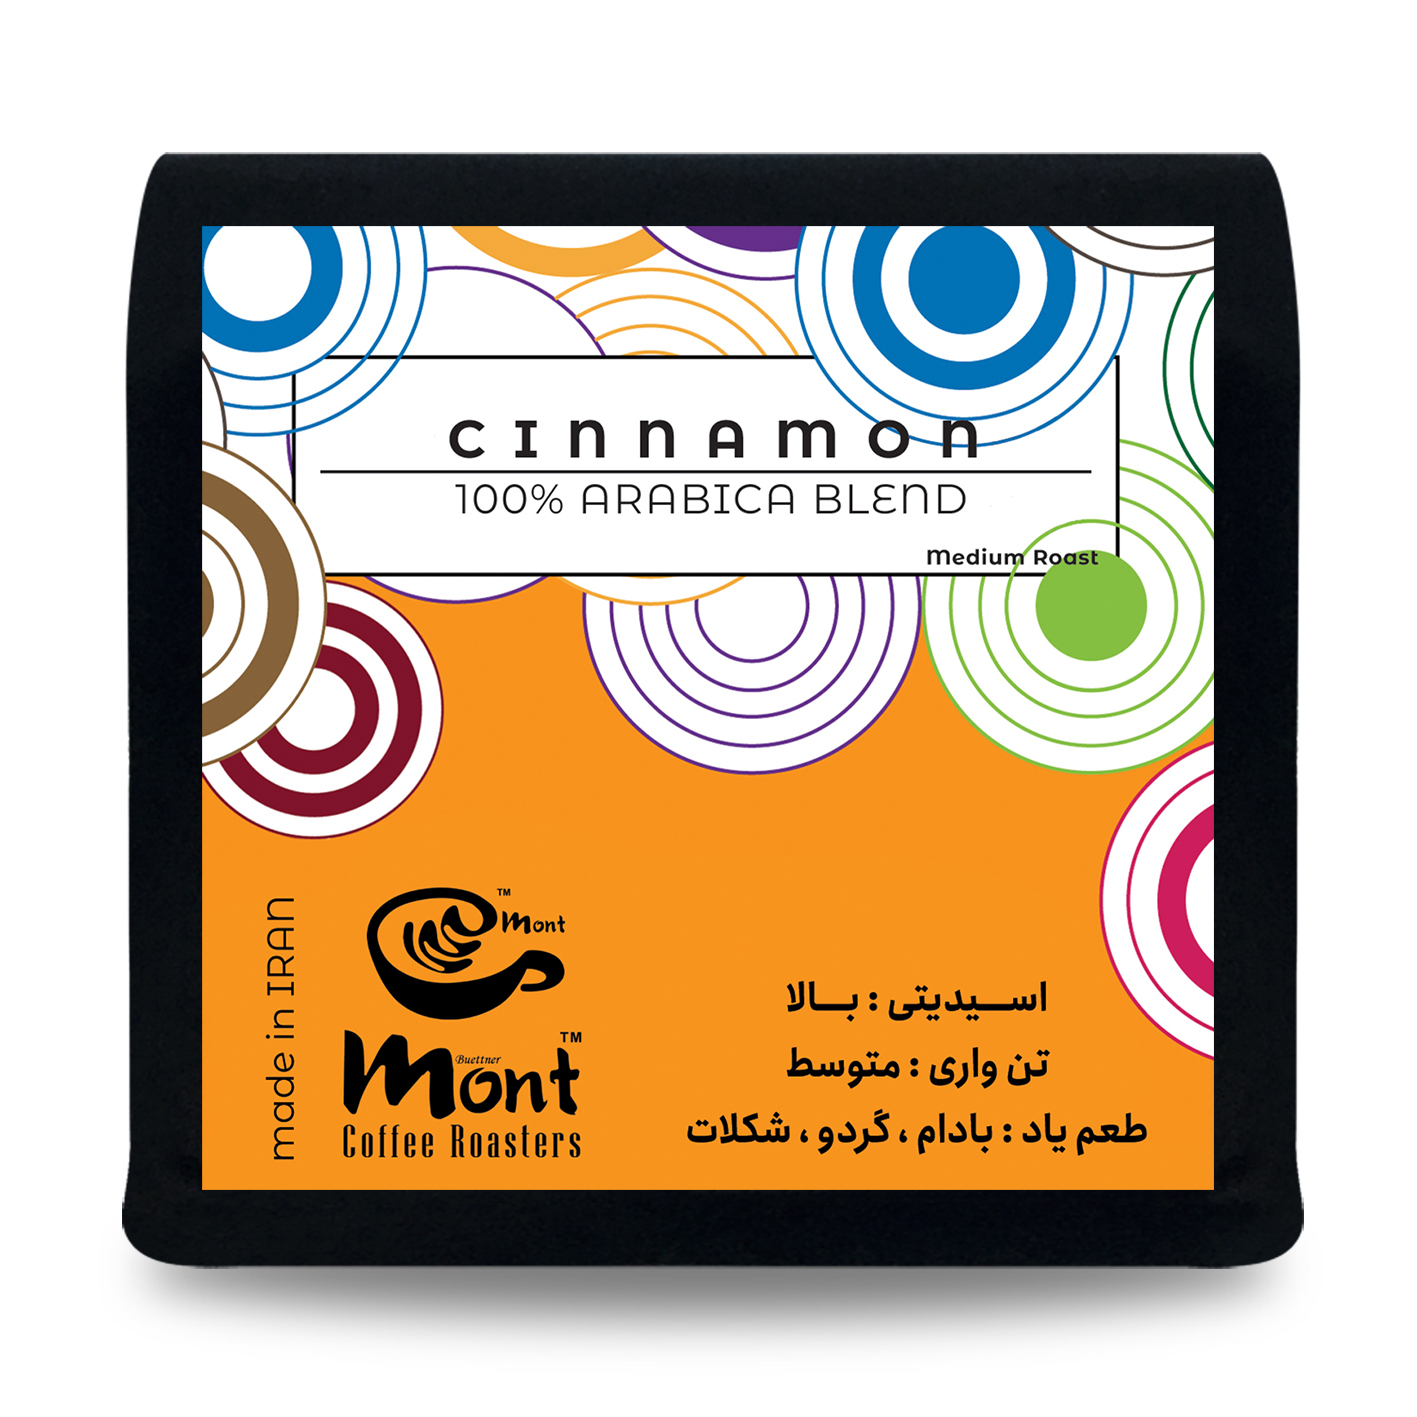 دانه قهوه ترکیبی 100% عربیکا سینامون مونت - 250 گرم